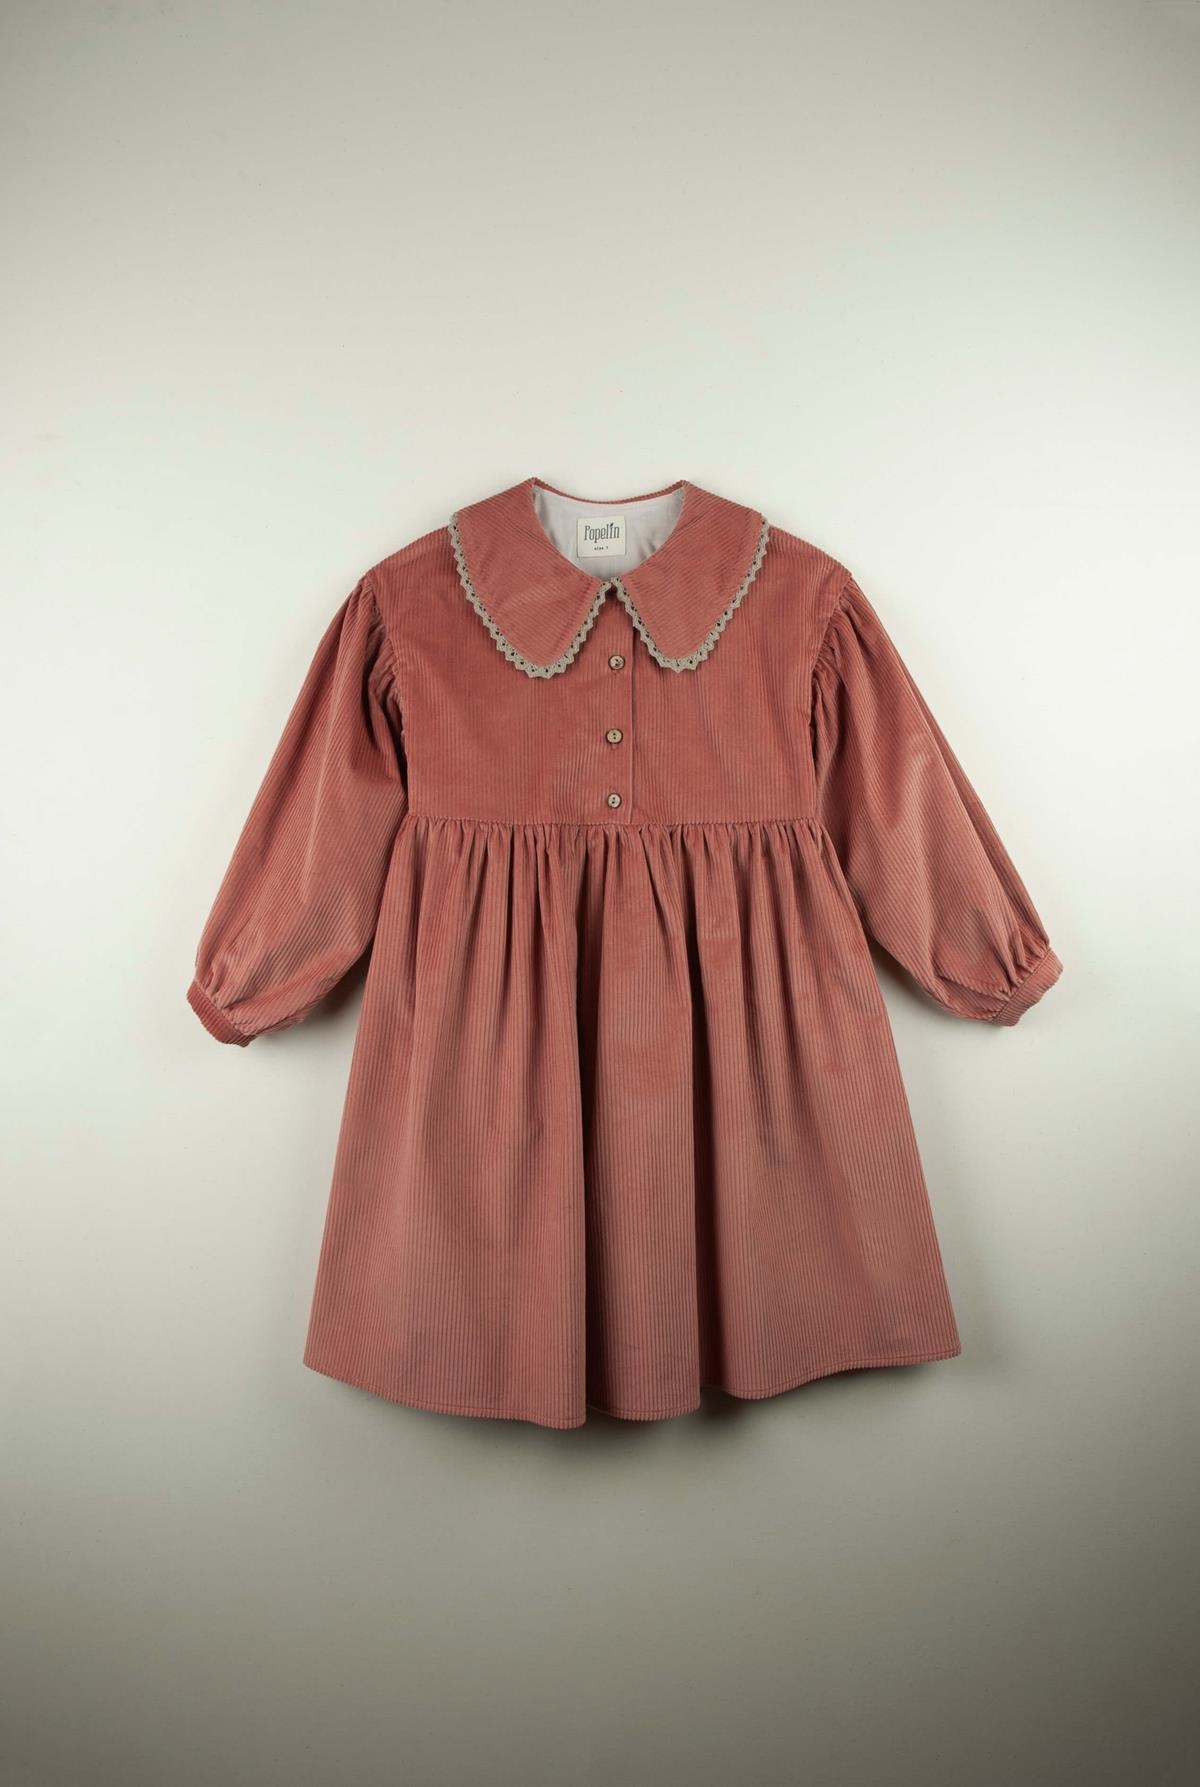 Mod.33.1 Pink statement collar dress | AW21.22 Mod.33.1 Pink statement collar dress | 1